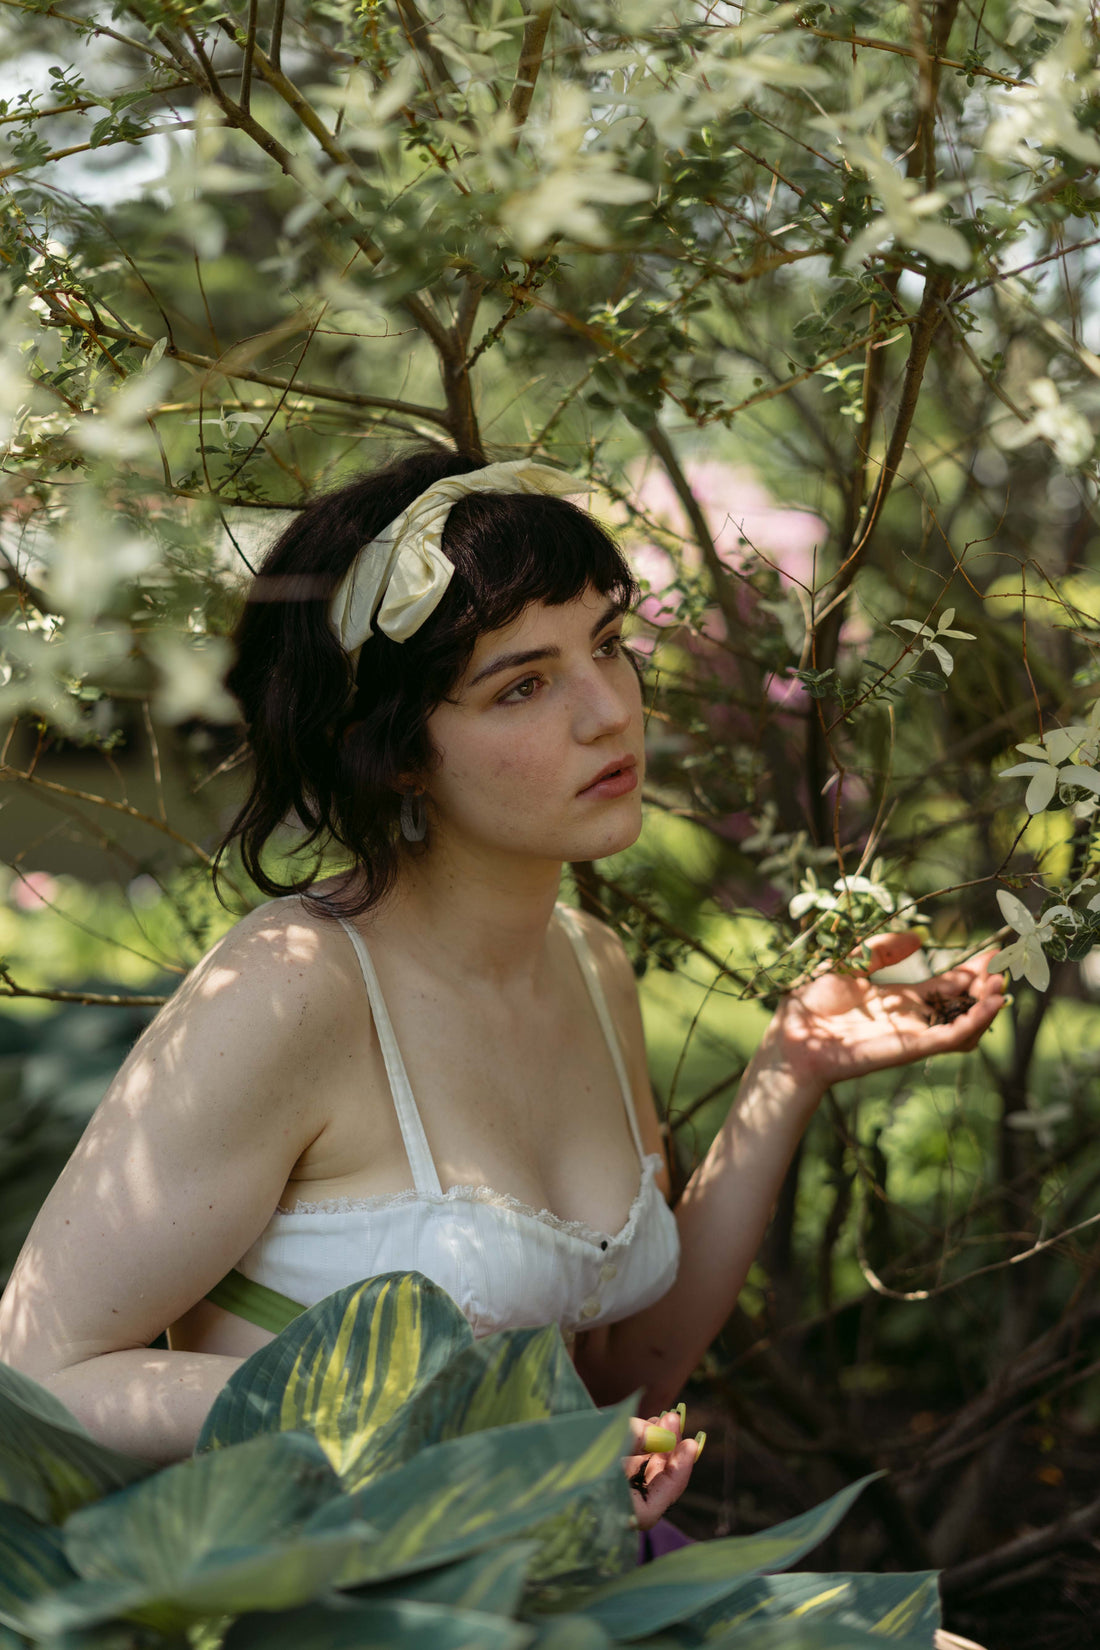 A fair-skinned woman with dark hair wears a cream and green bandana in the garden